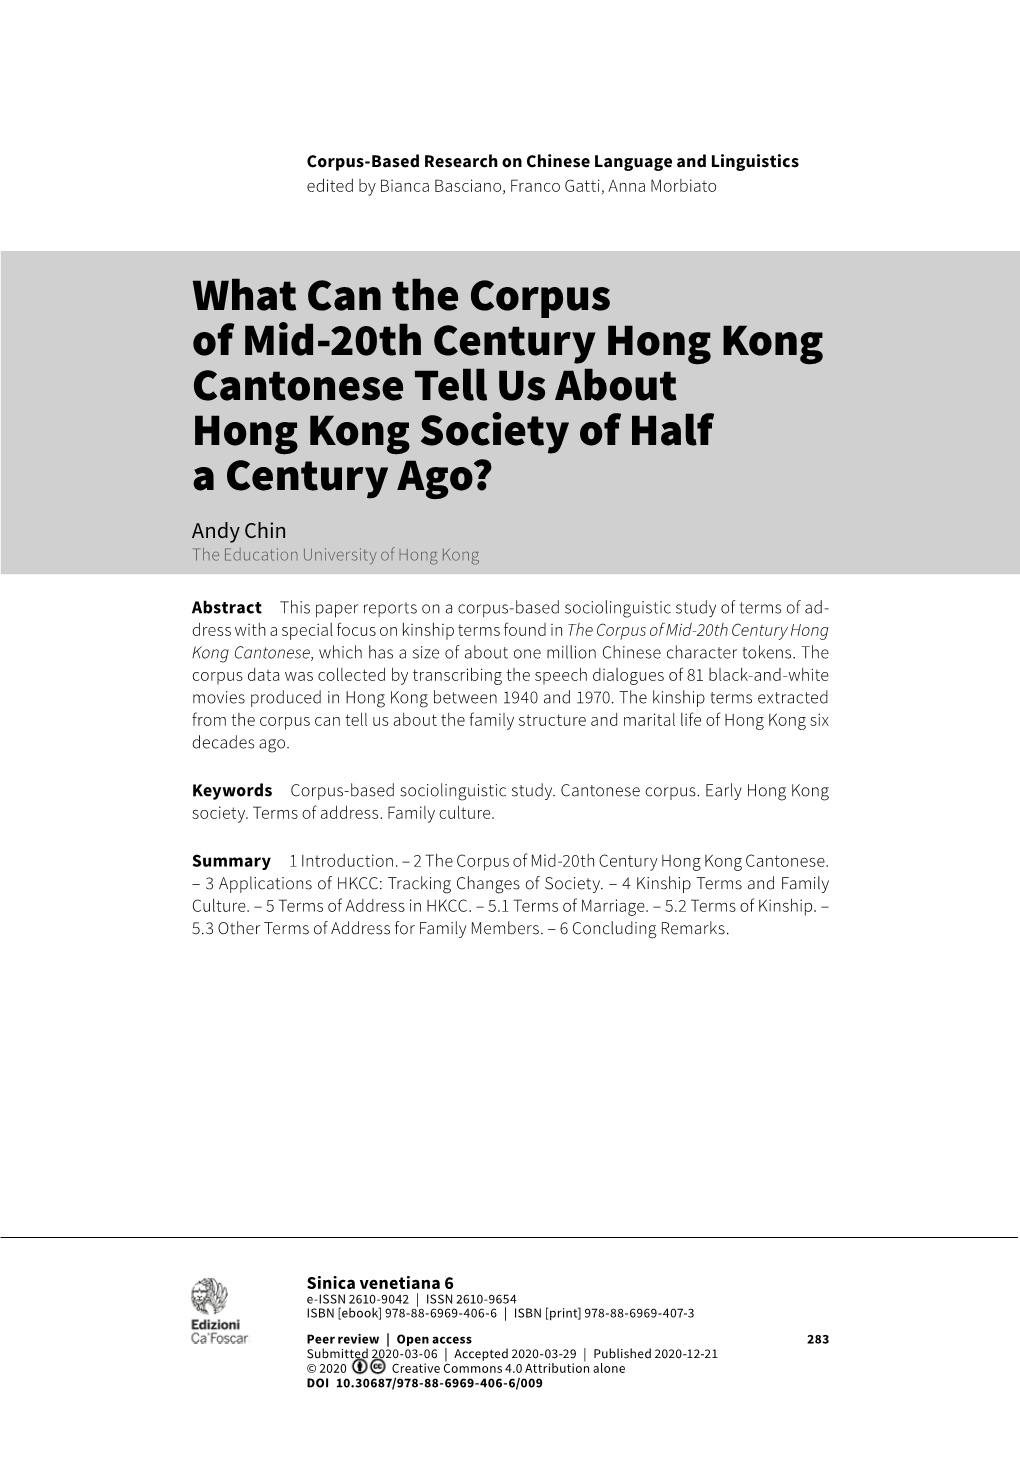 What Can the Corpus of Mid-20Th Century Hong Kong Cantonese Tell Us About Hong Kong Society of Half a Century Ago? Andy Chin the Education University of Hong Kong